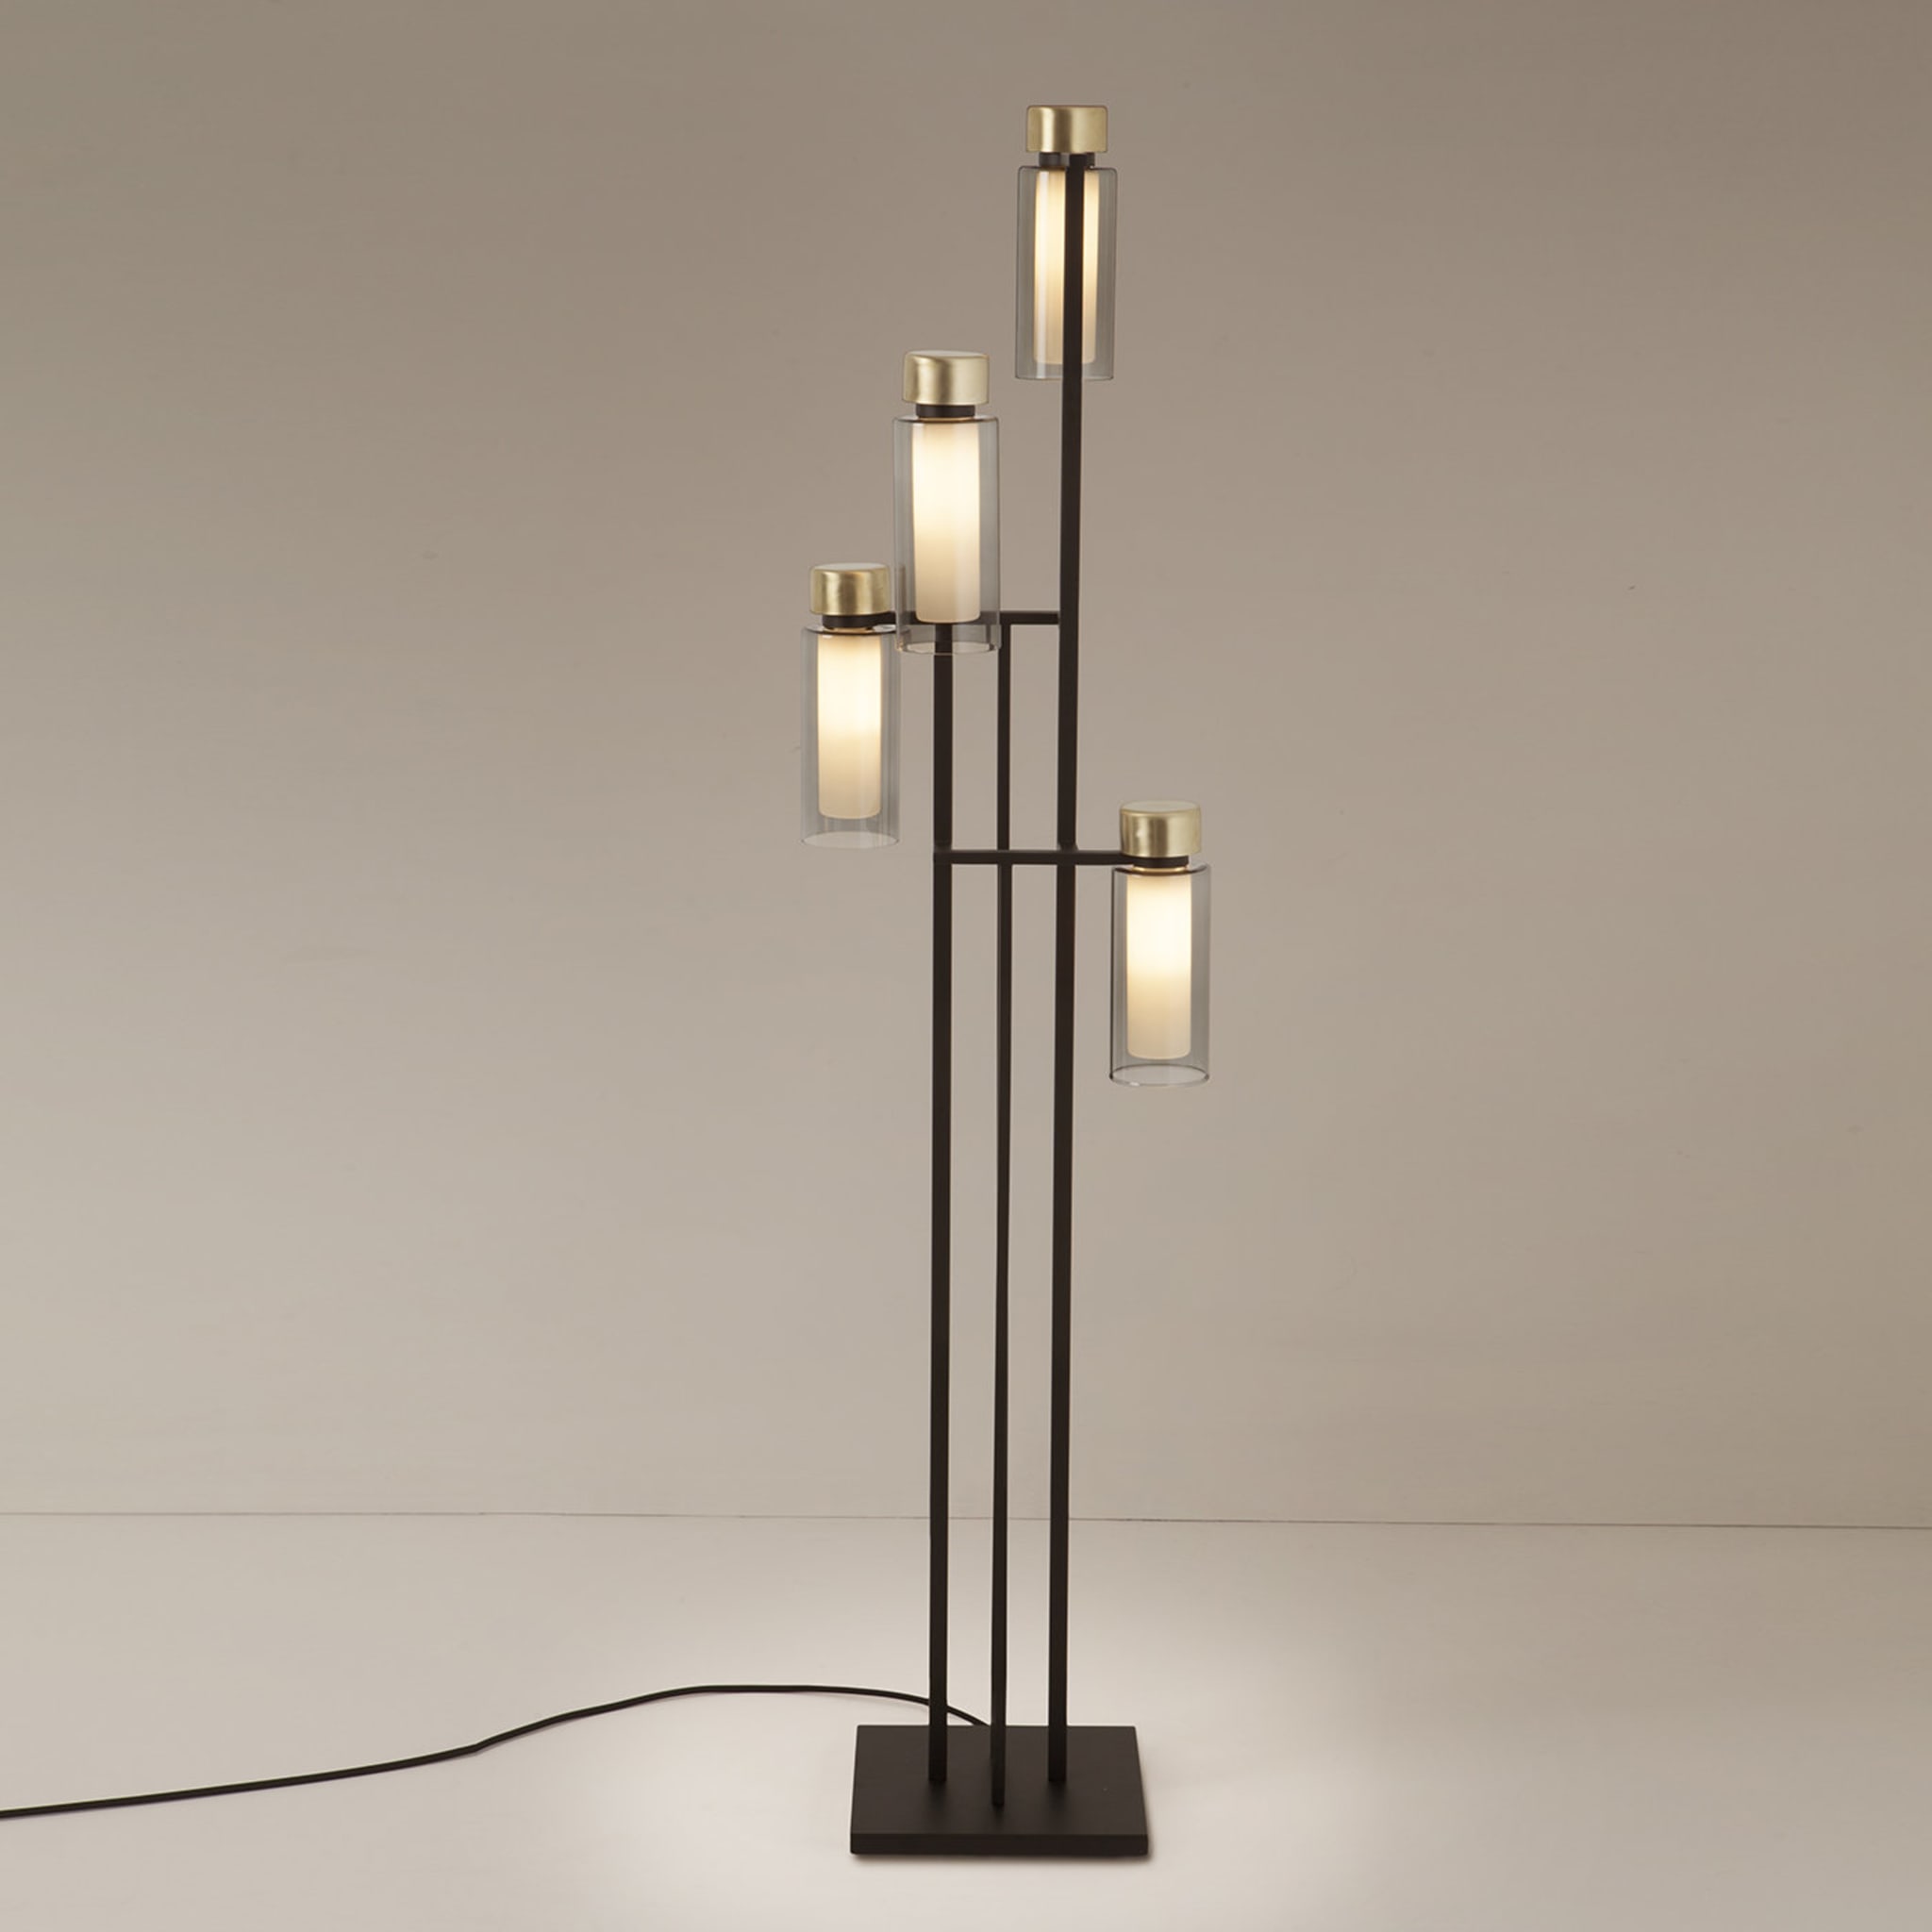 Osman 4-Light Floor Lamp by Corrado Dotti - Alternative view 1